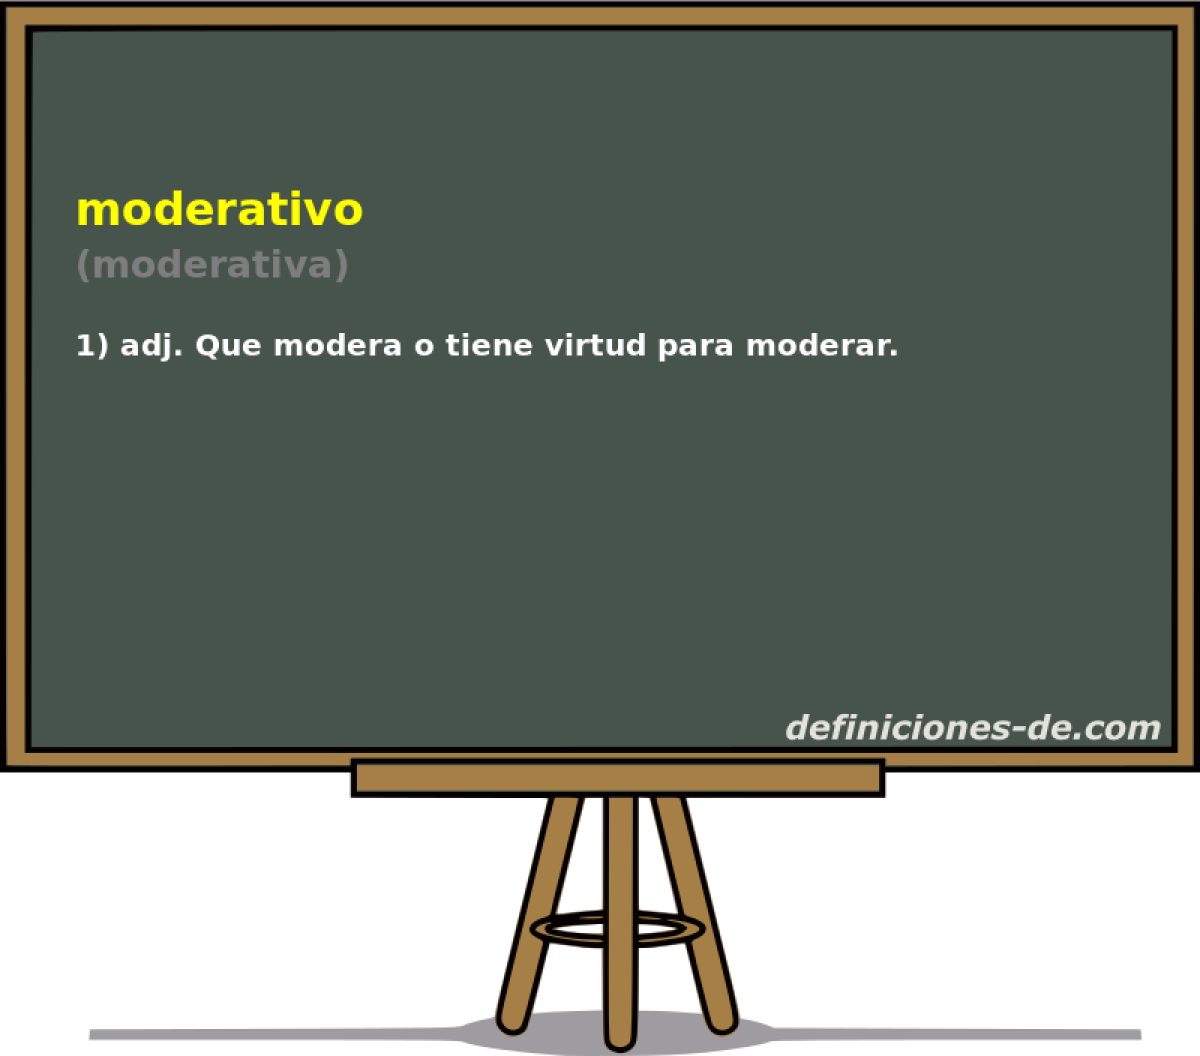 moderativo (moderativa)